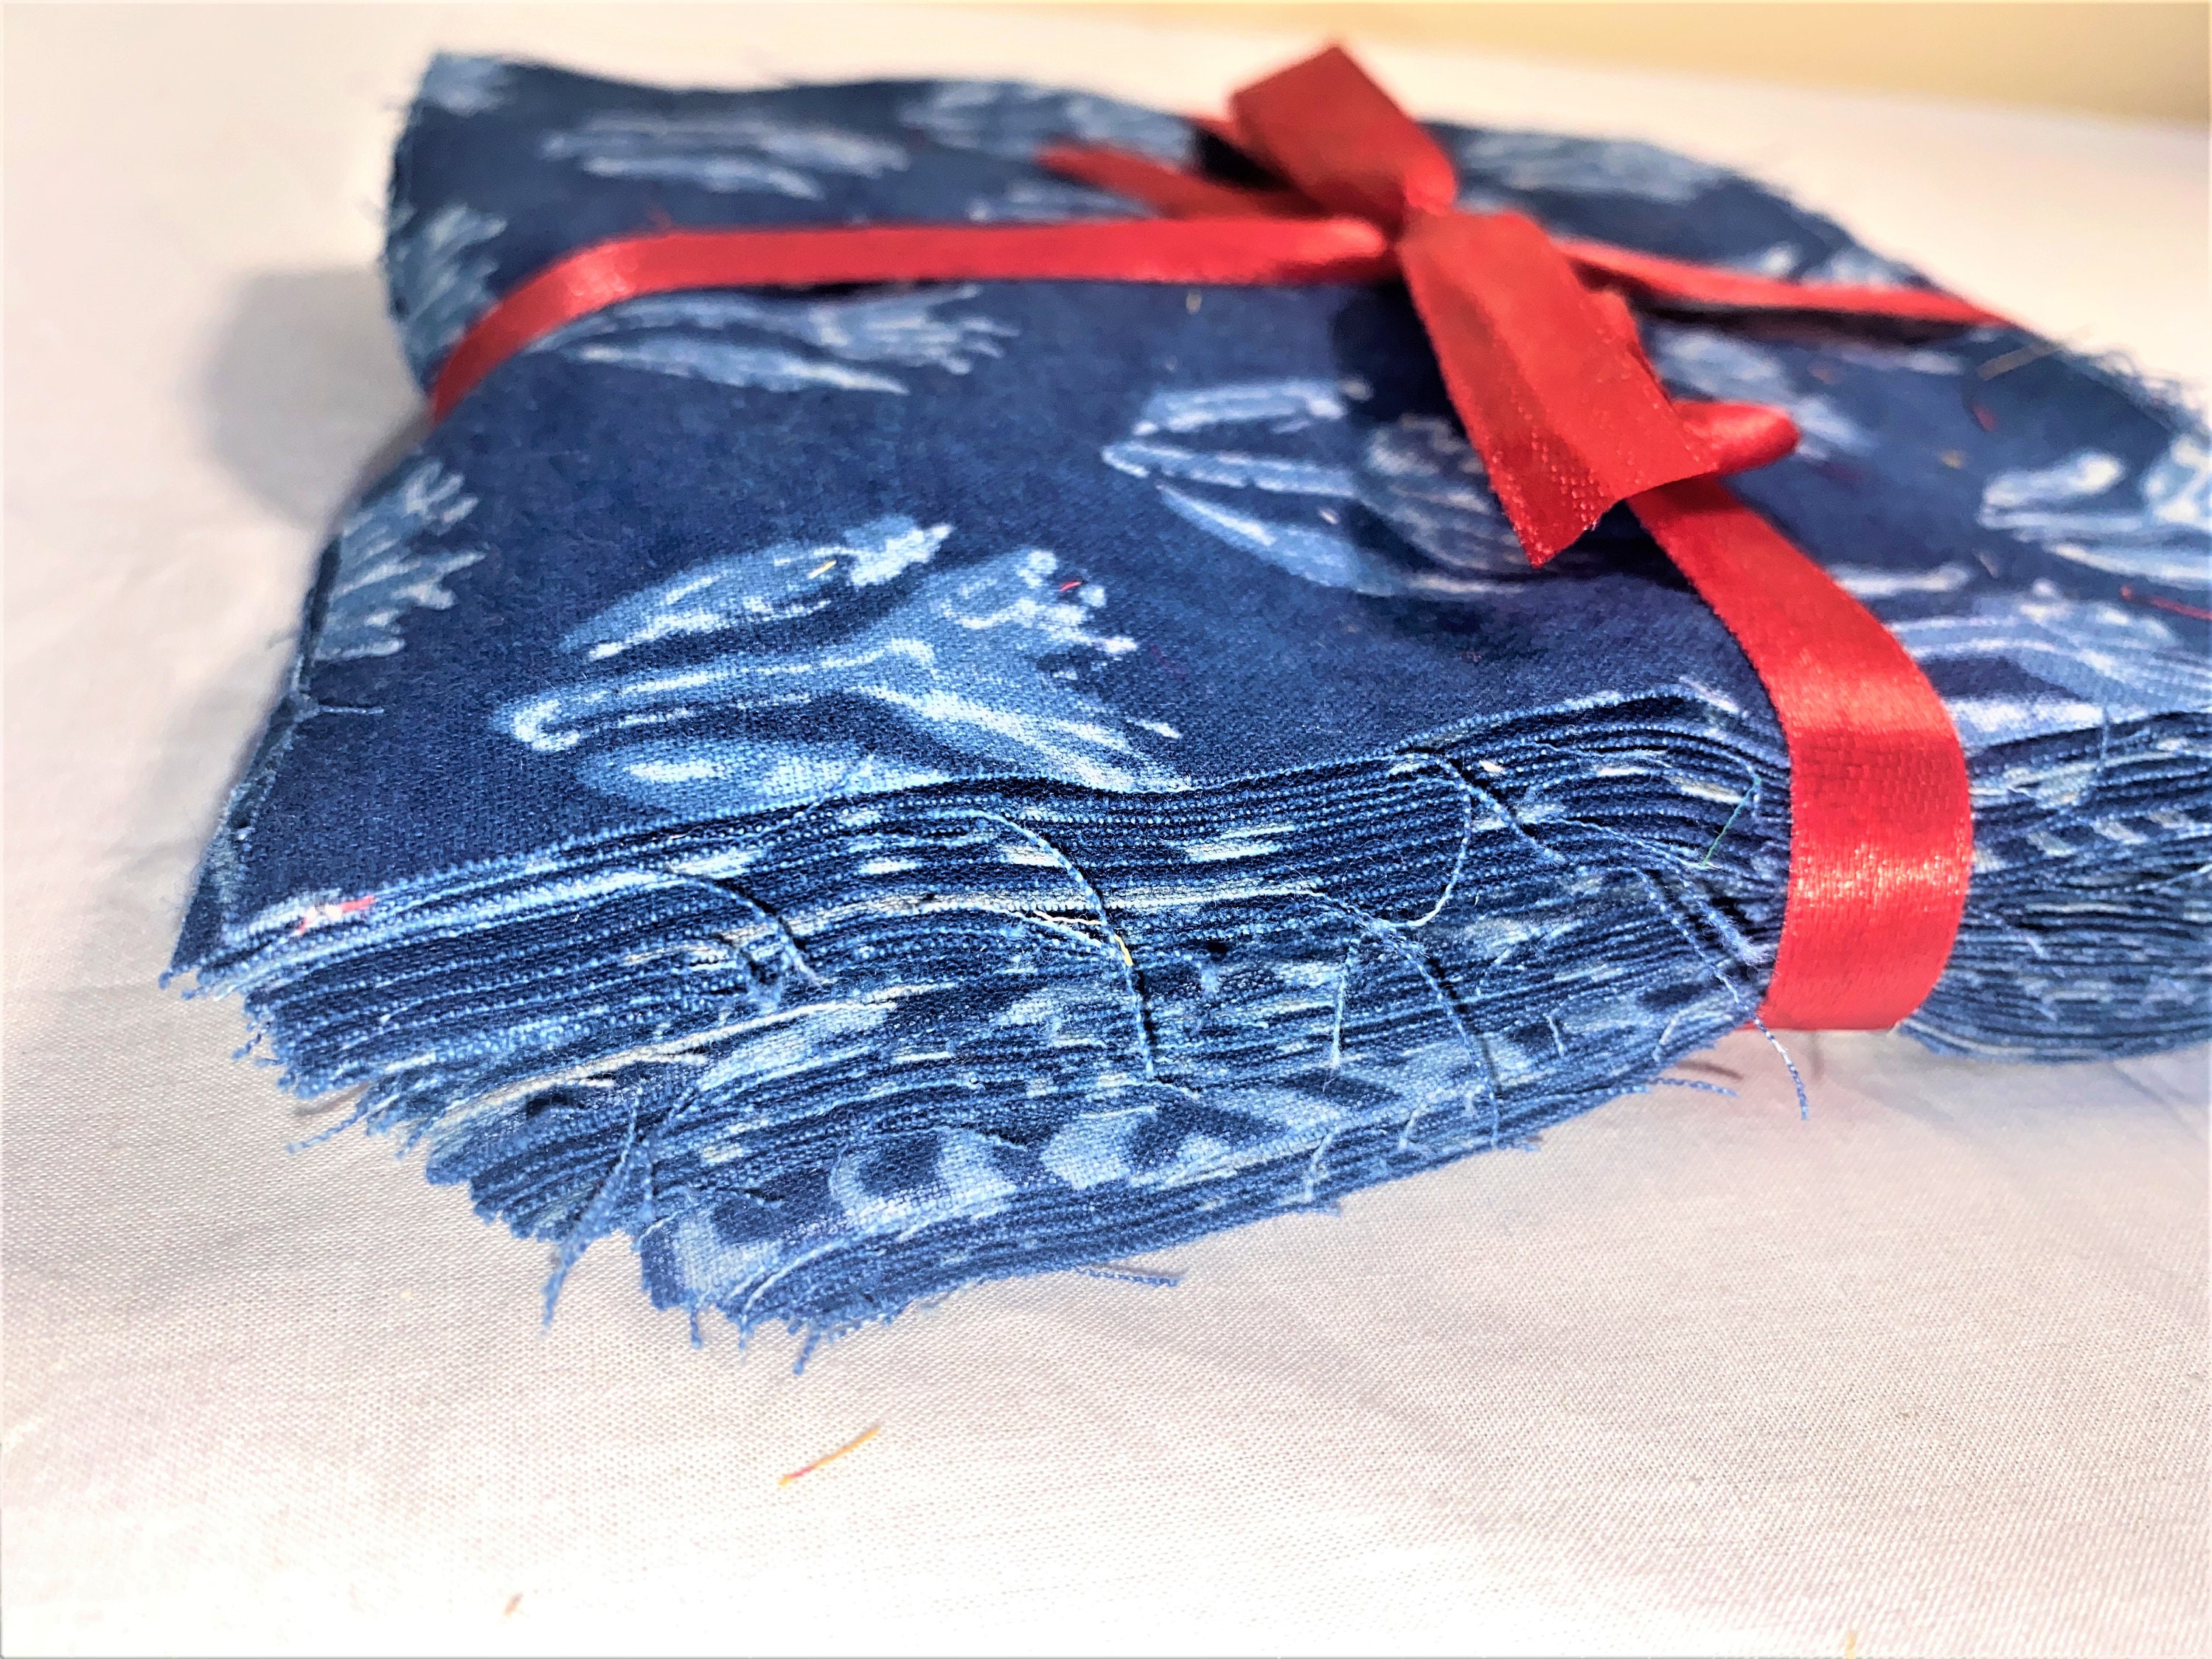 Indigo Blue Fabric Scraps, Boho Quilting Cotton Fabric, Indian Quilt Fabric  Remnants Packs 